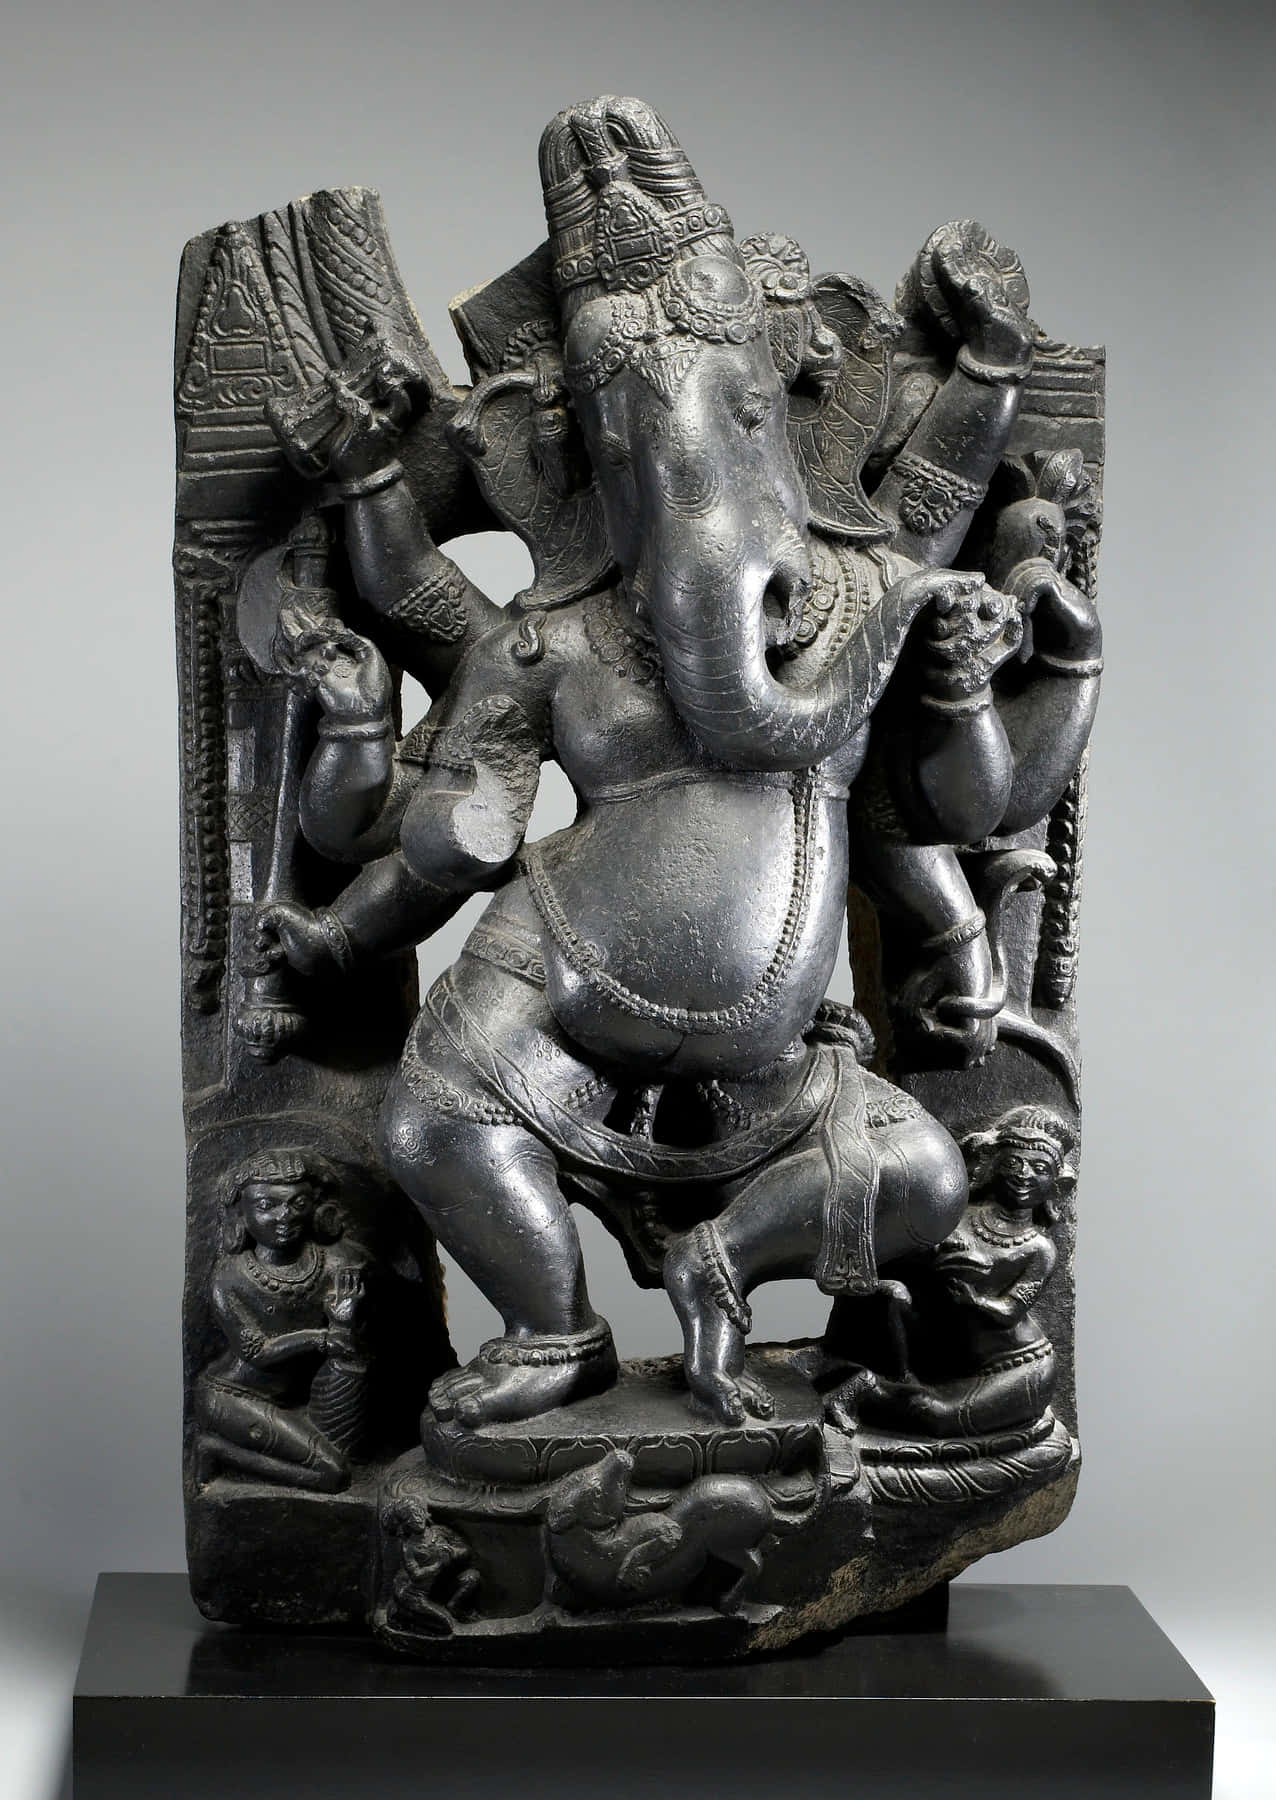 Lord Ganesha on the Sacred Mount